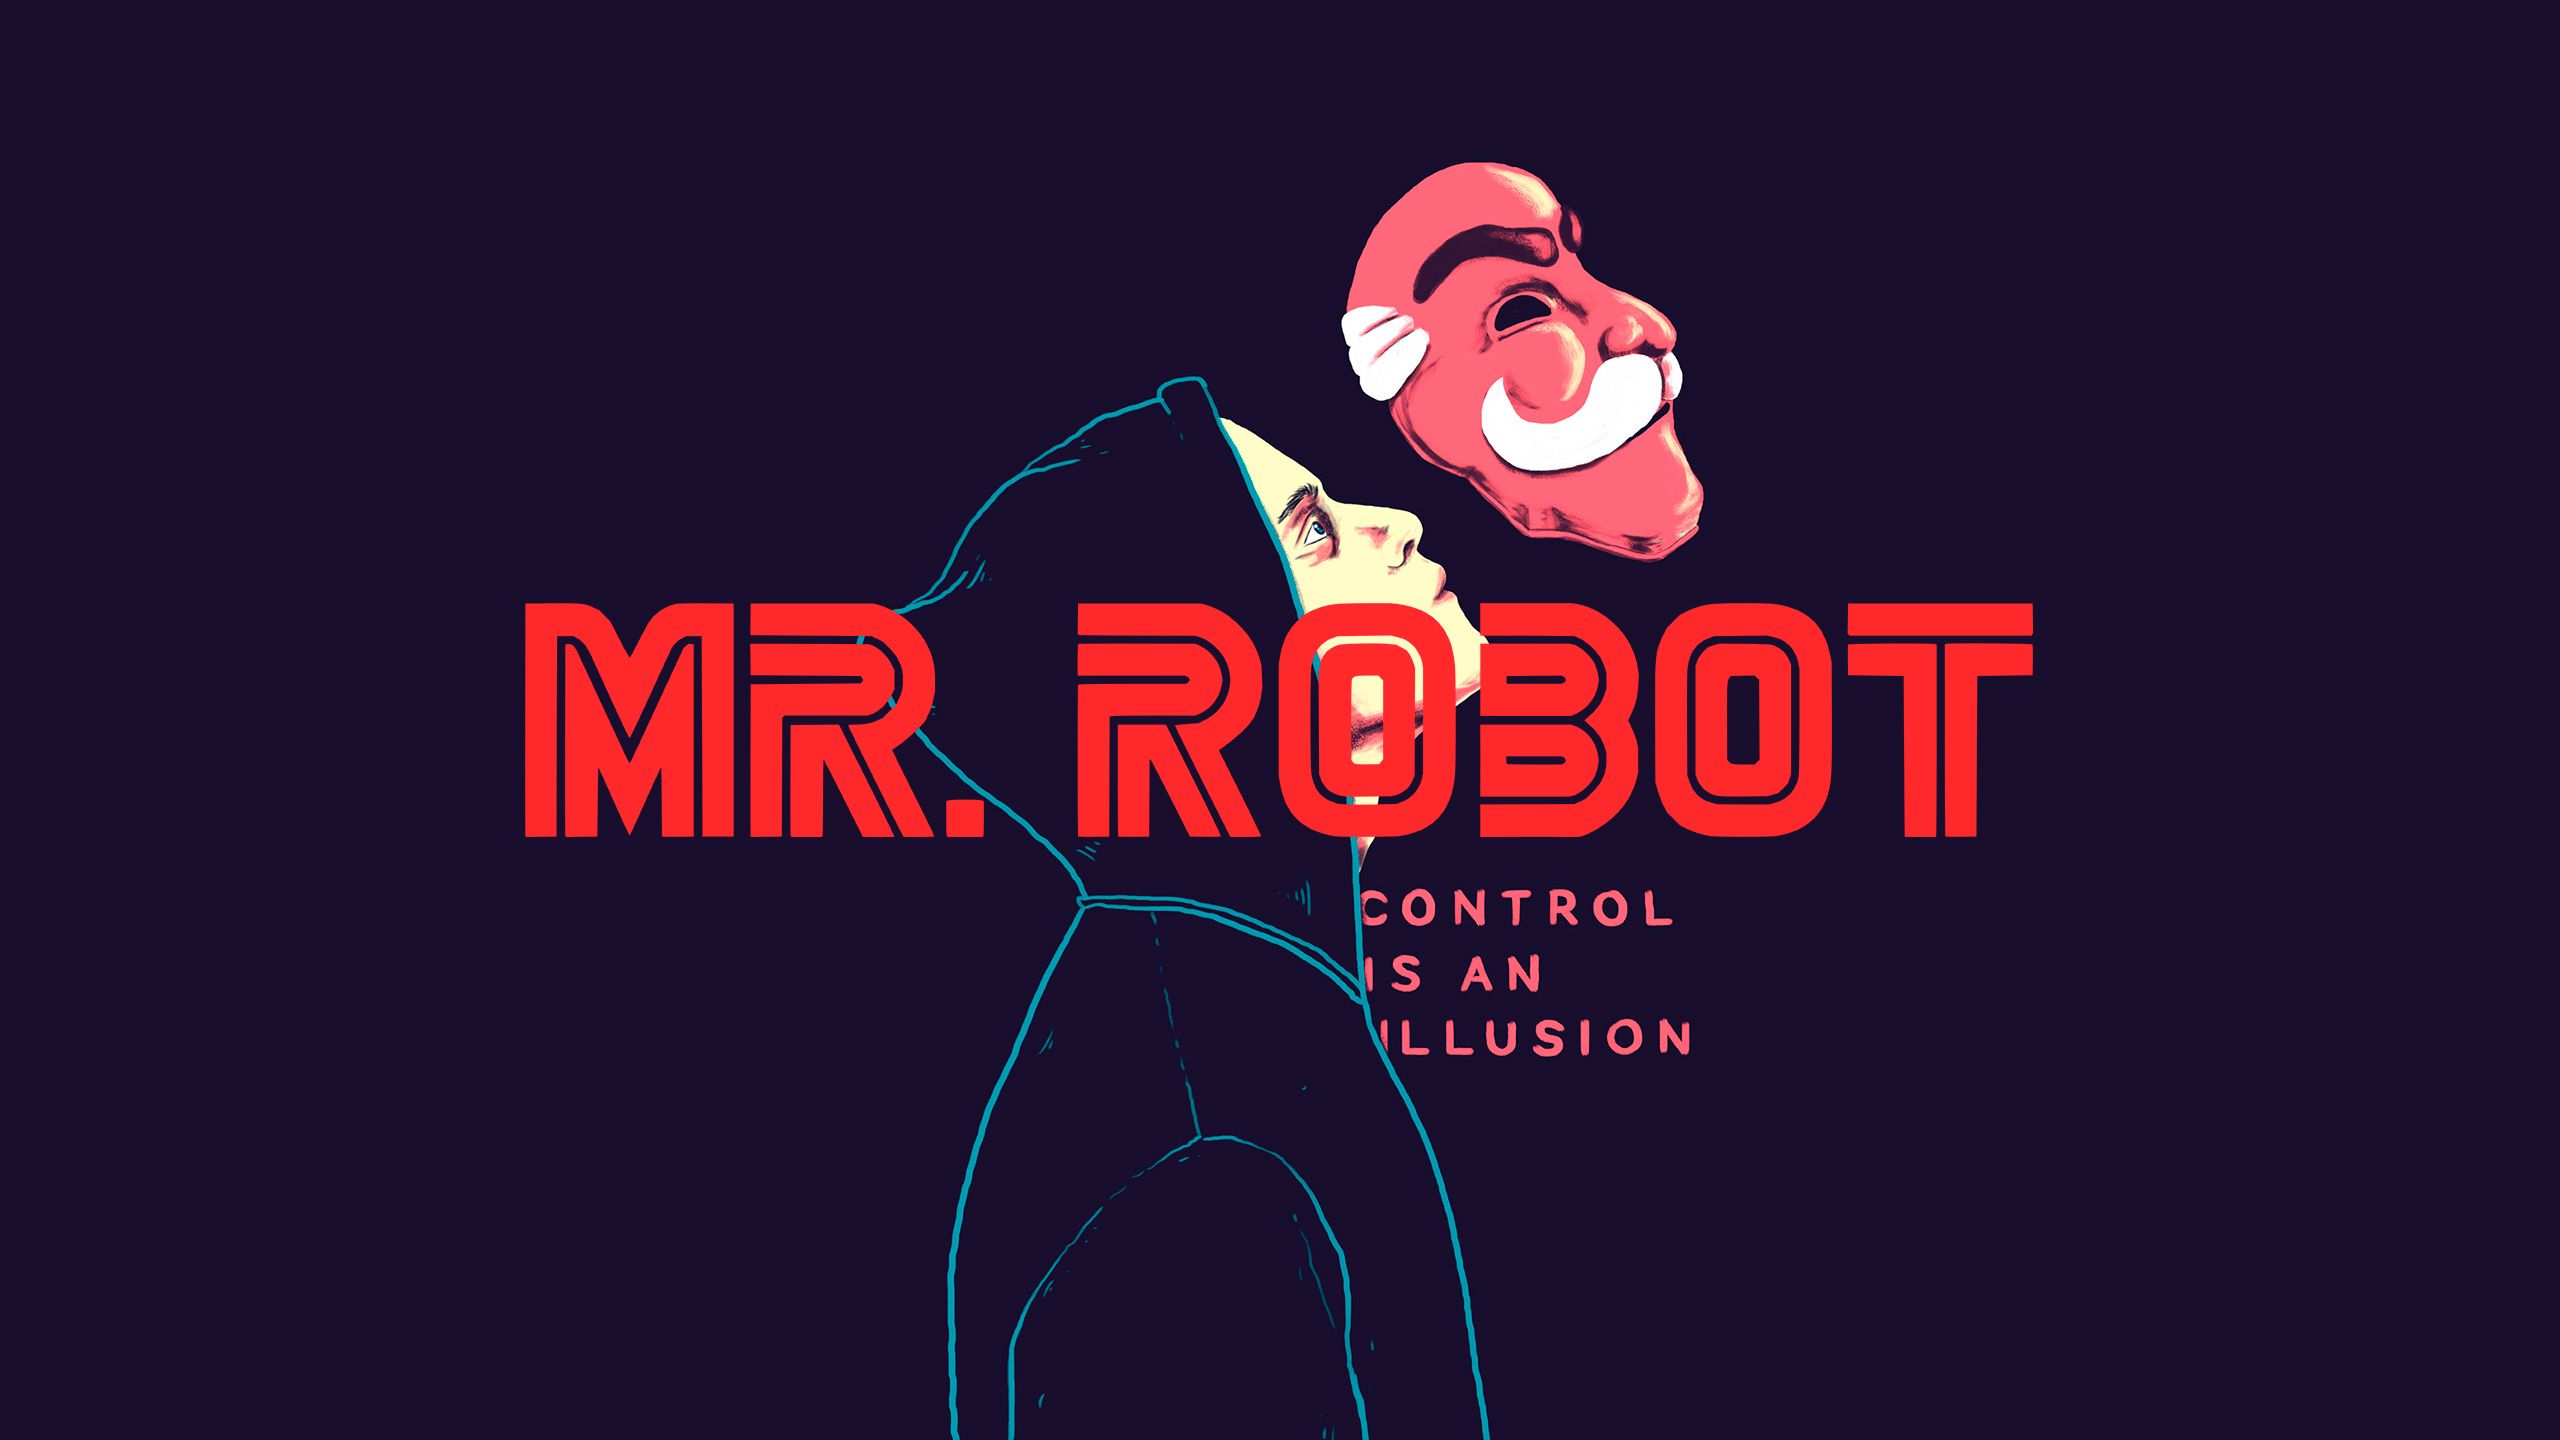 Mr Robot Wallpaper Free Mr Robot Background